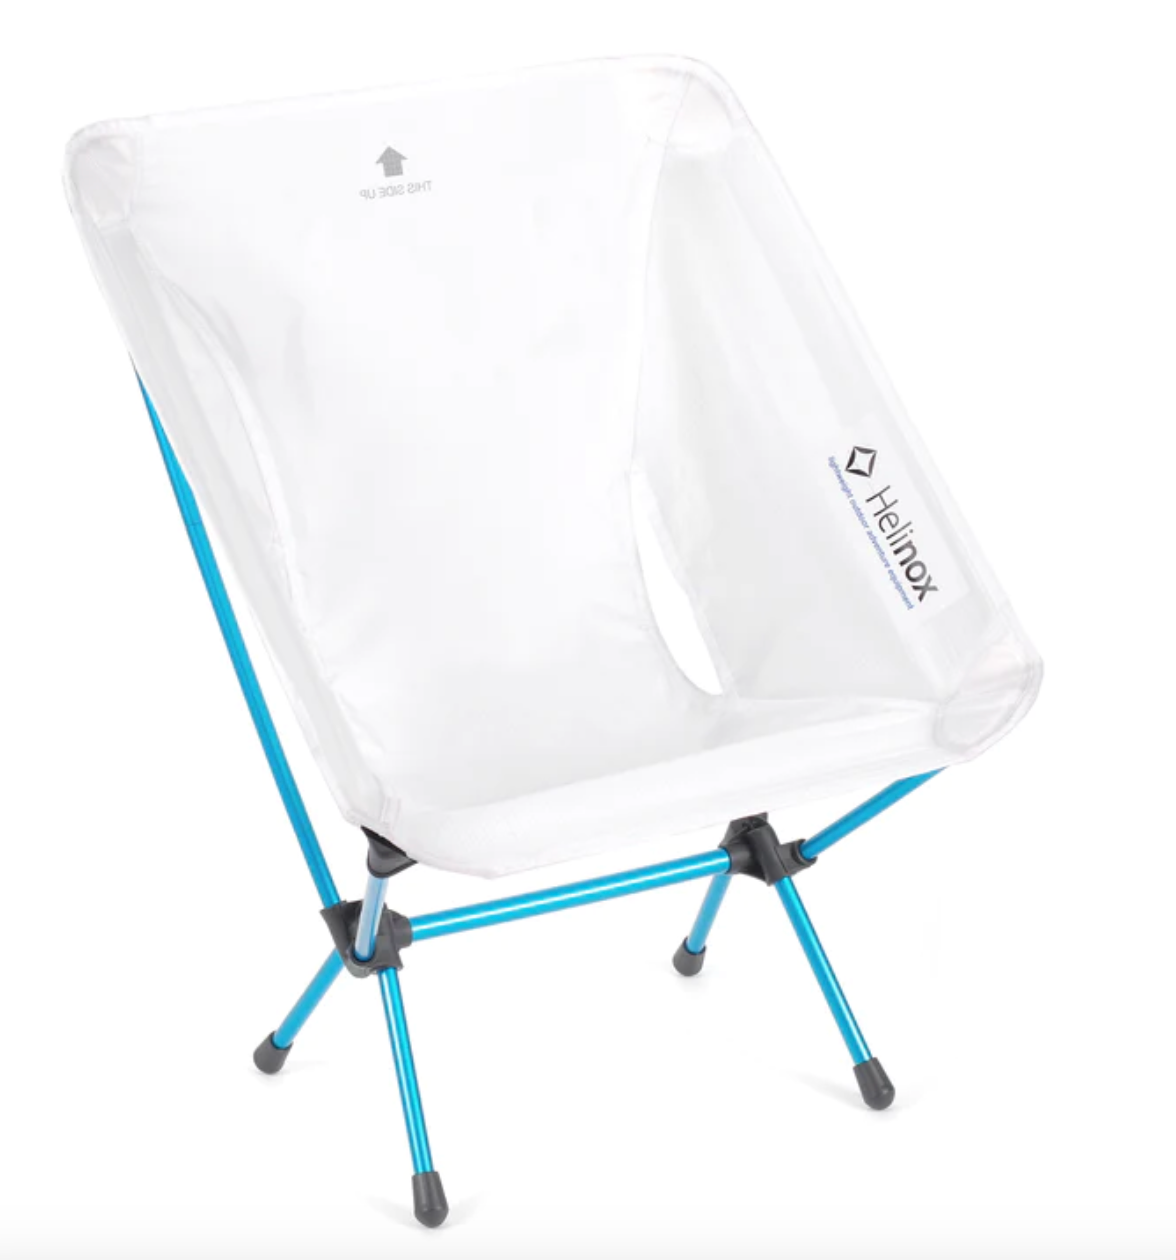 Helinox Chair Zero